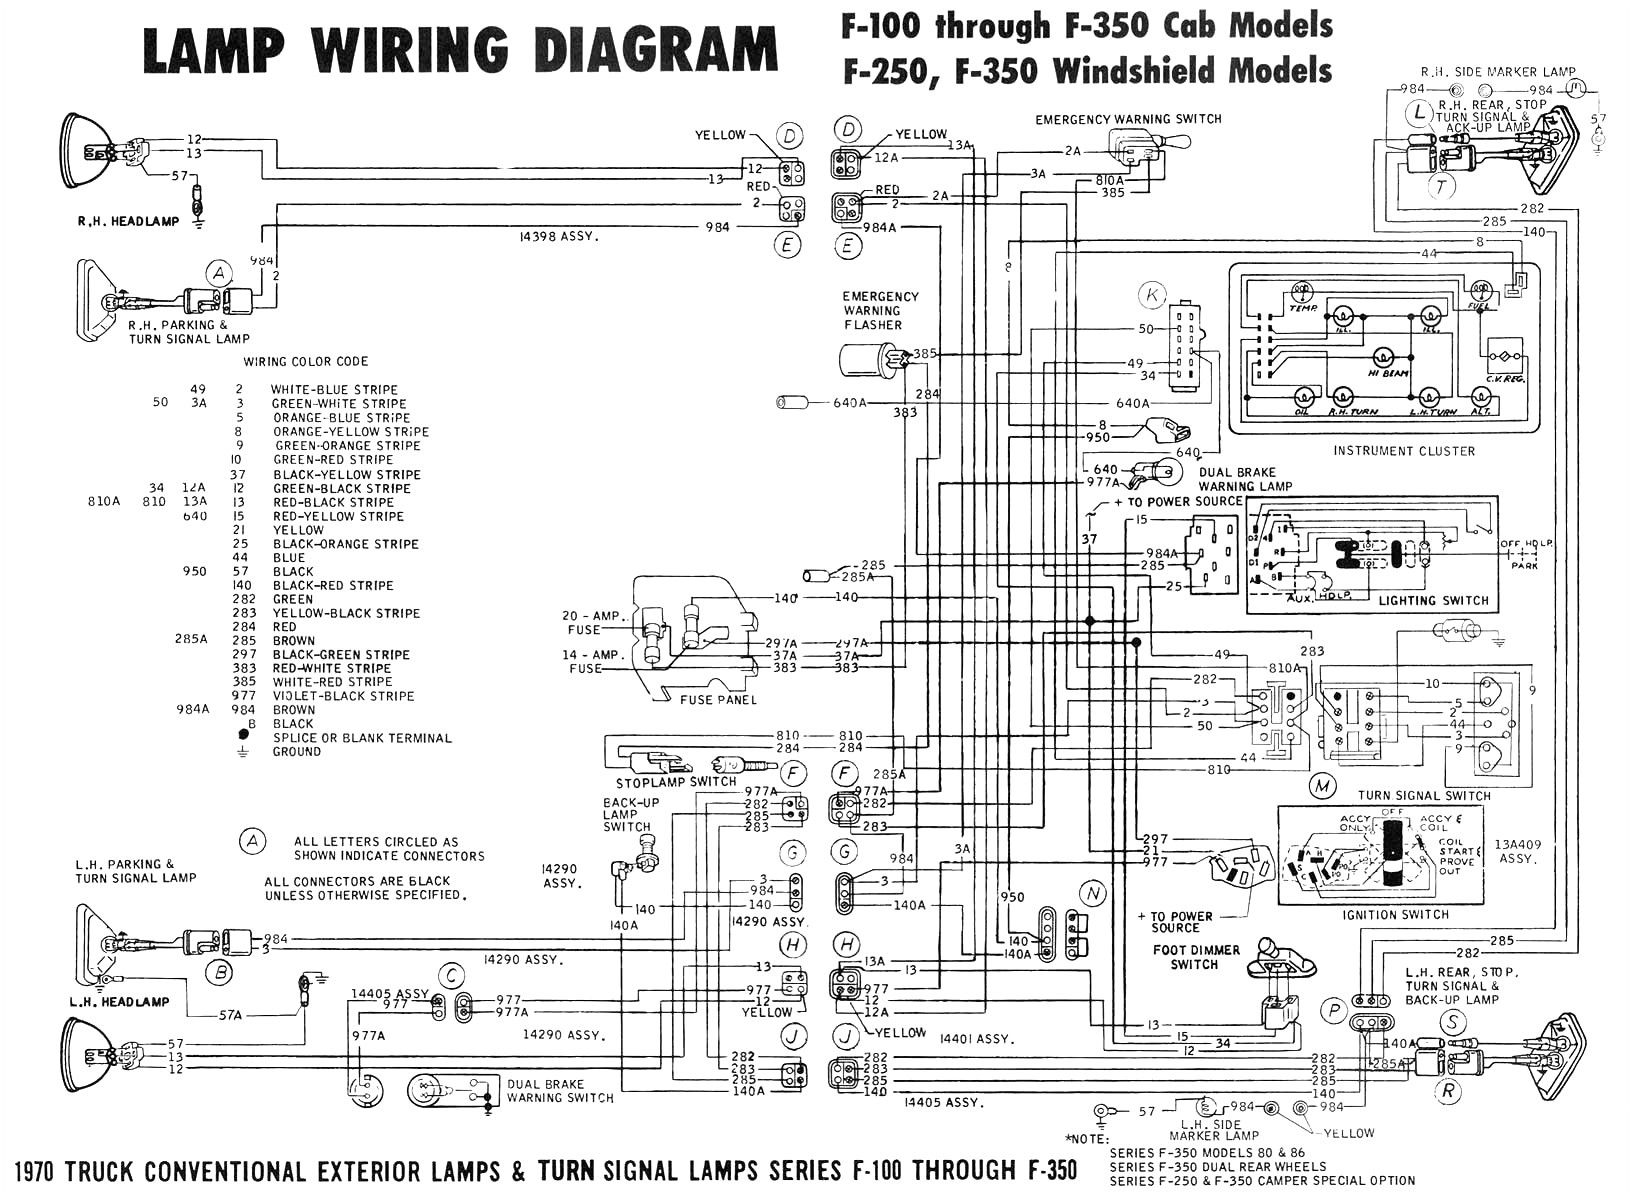 06 mustang wiring diagram free download schematic wiring diagrams wiring diagram for ford mustang free wiring